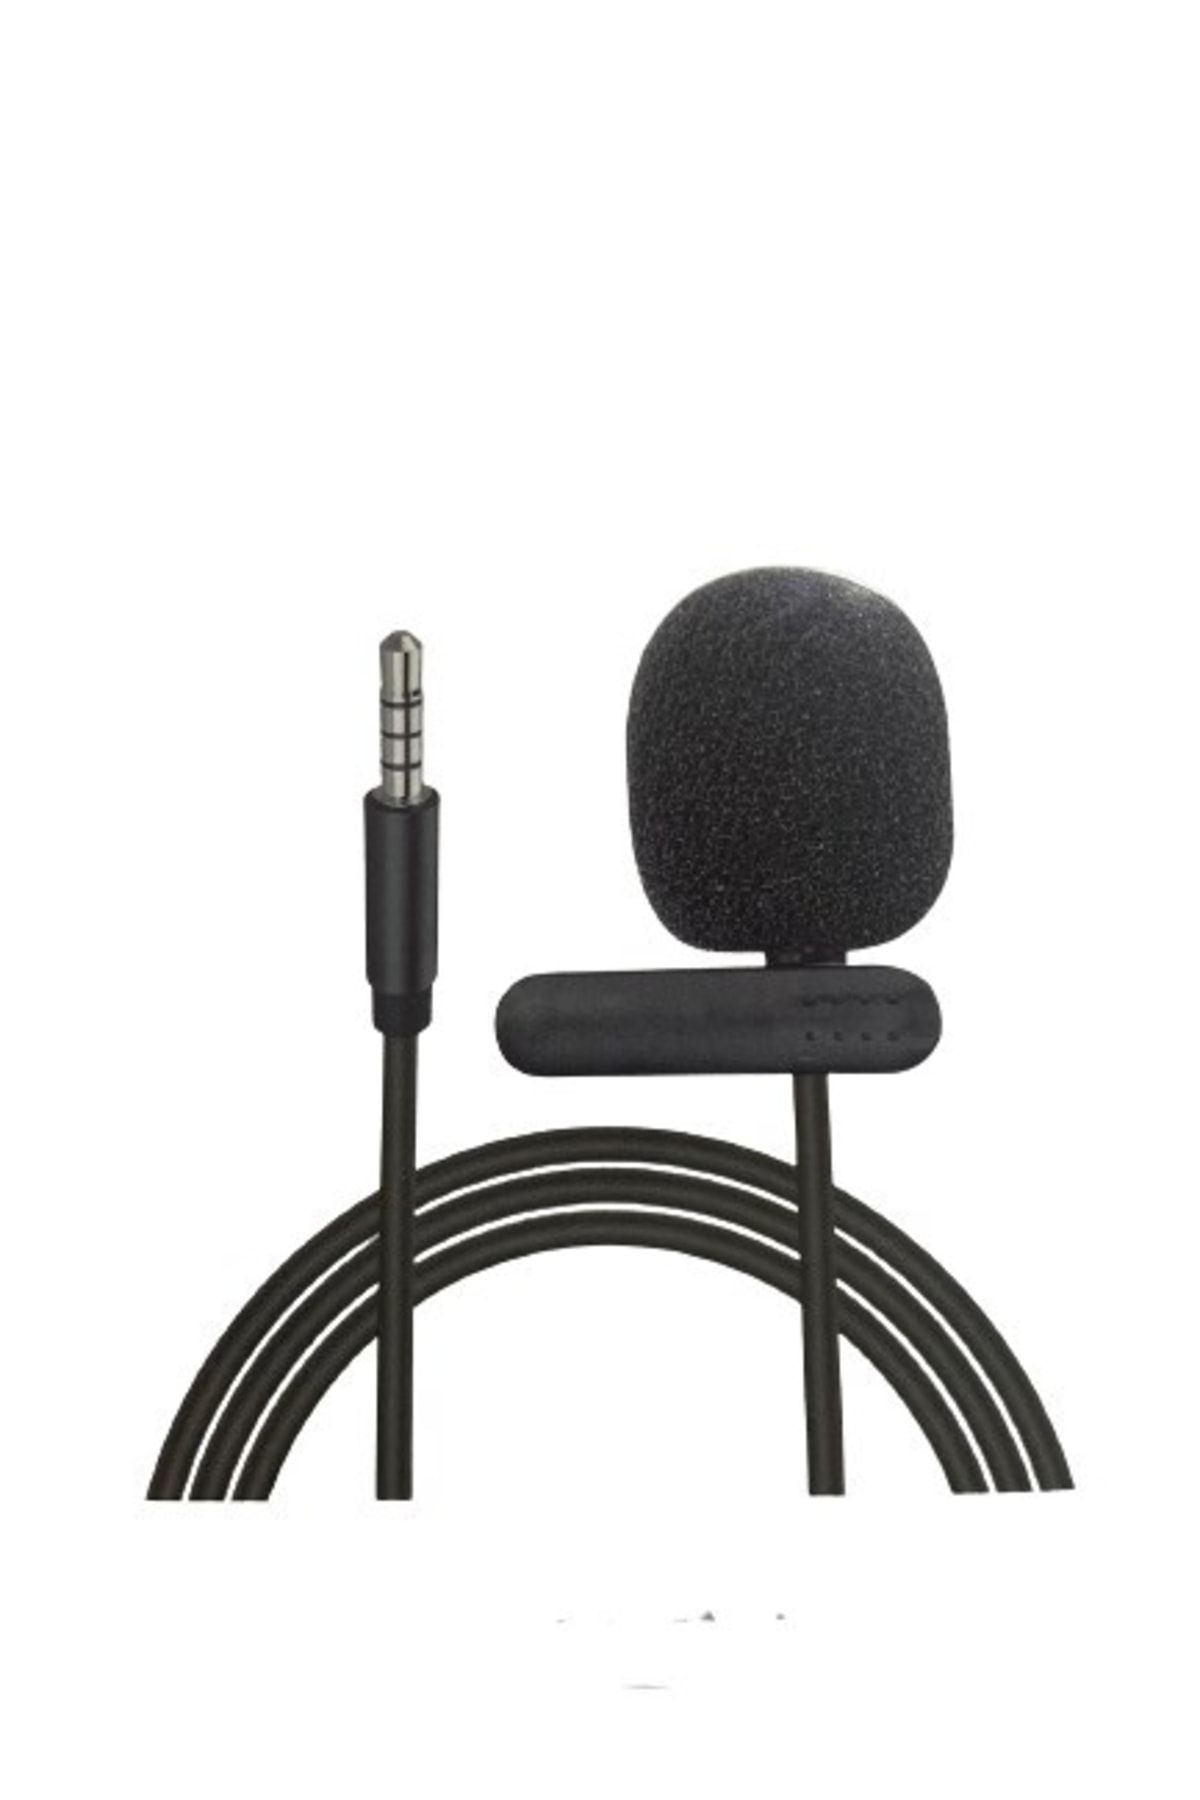 Snopy Yaka Mikrofonu 3.5mm Jack 1.5 Metre Kablo Youtuber Yaka Mikrofonu Sn-mtk15